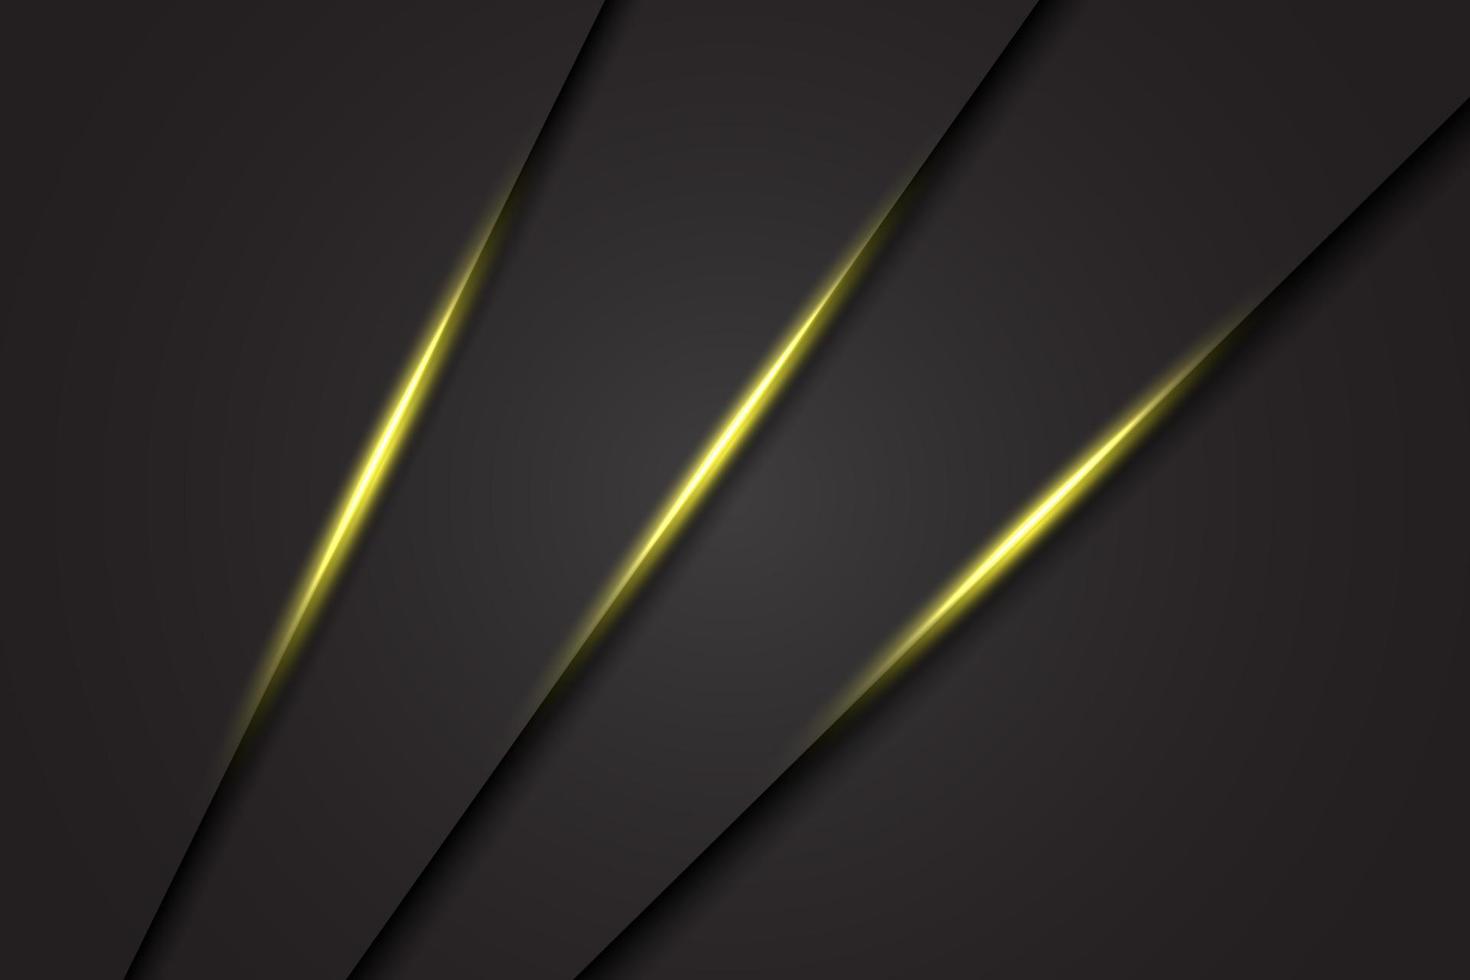 triângulo de barra de luz verde abstrato no design cinza escuro moderno luxo futurista tecnologia fundo ilustração vetorial. vetor